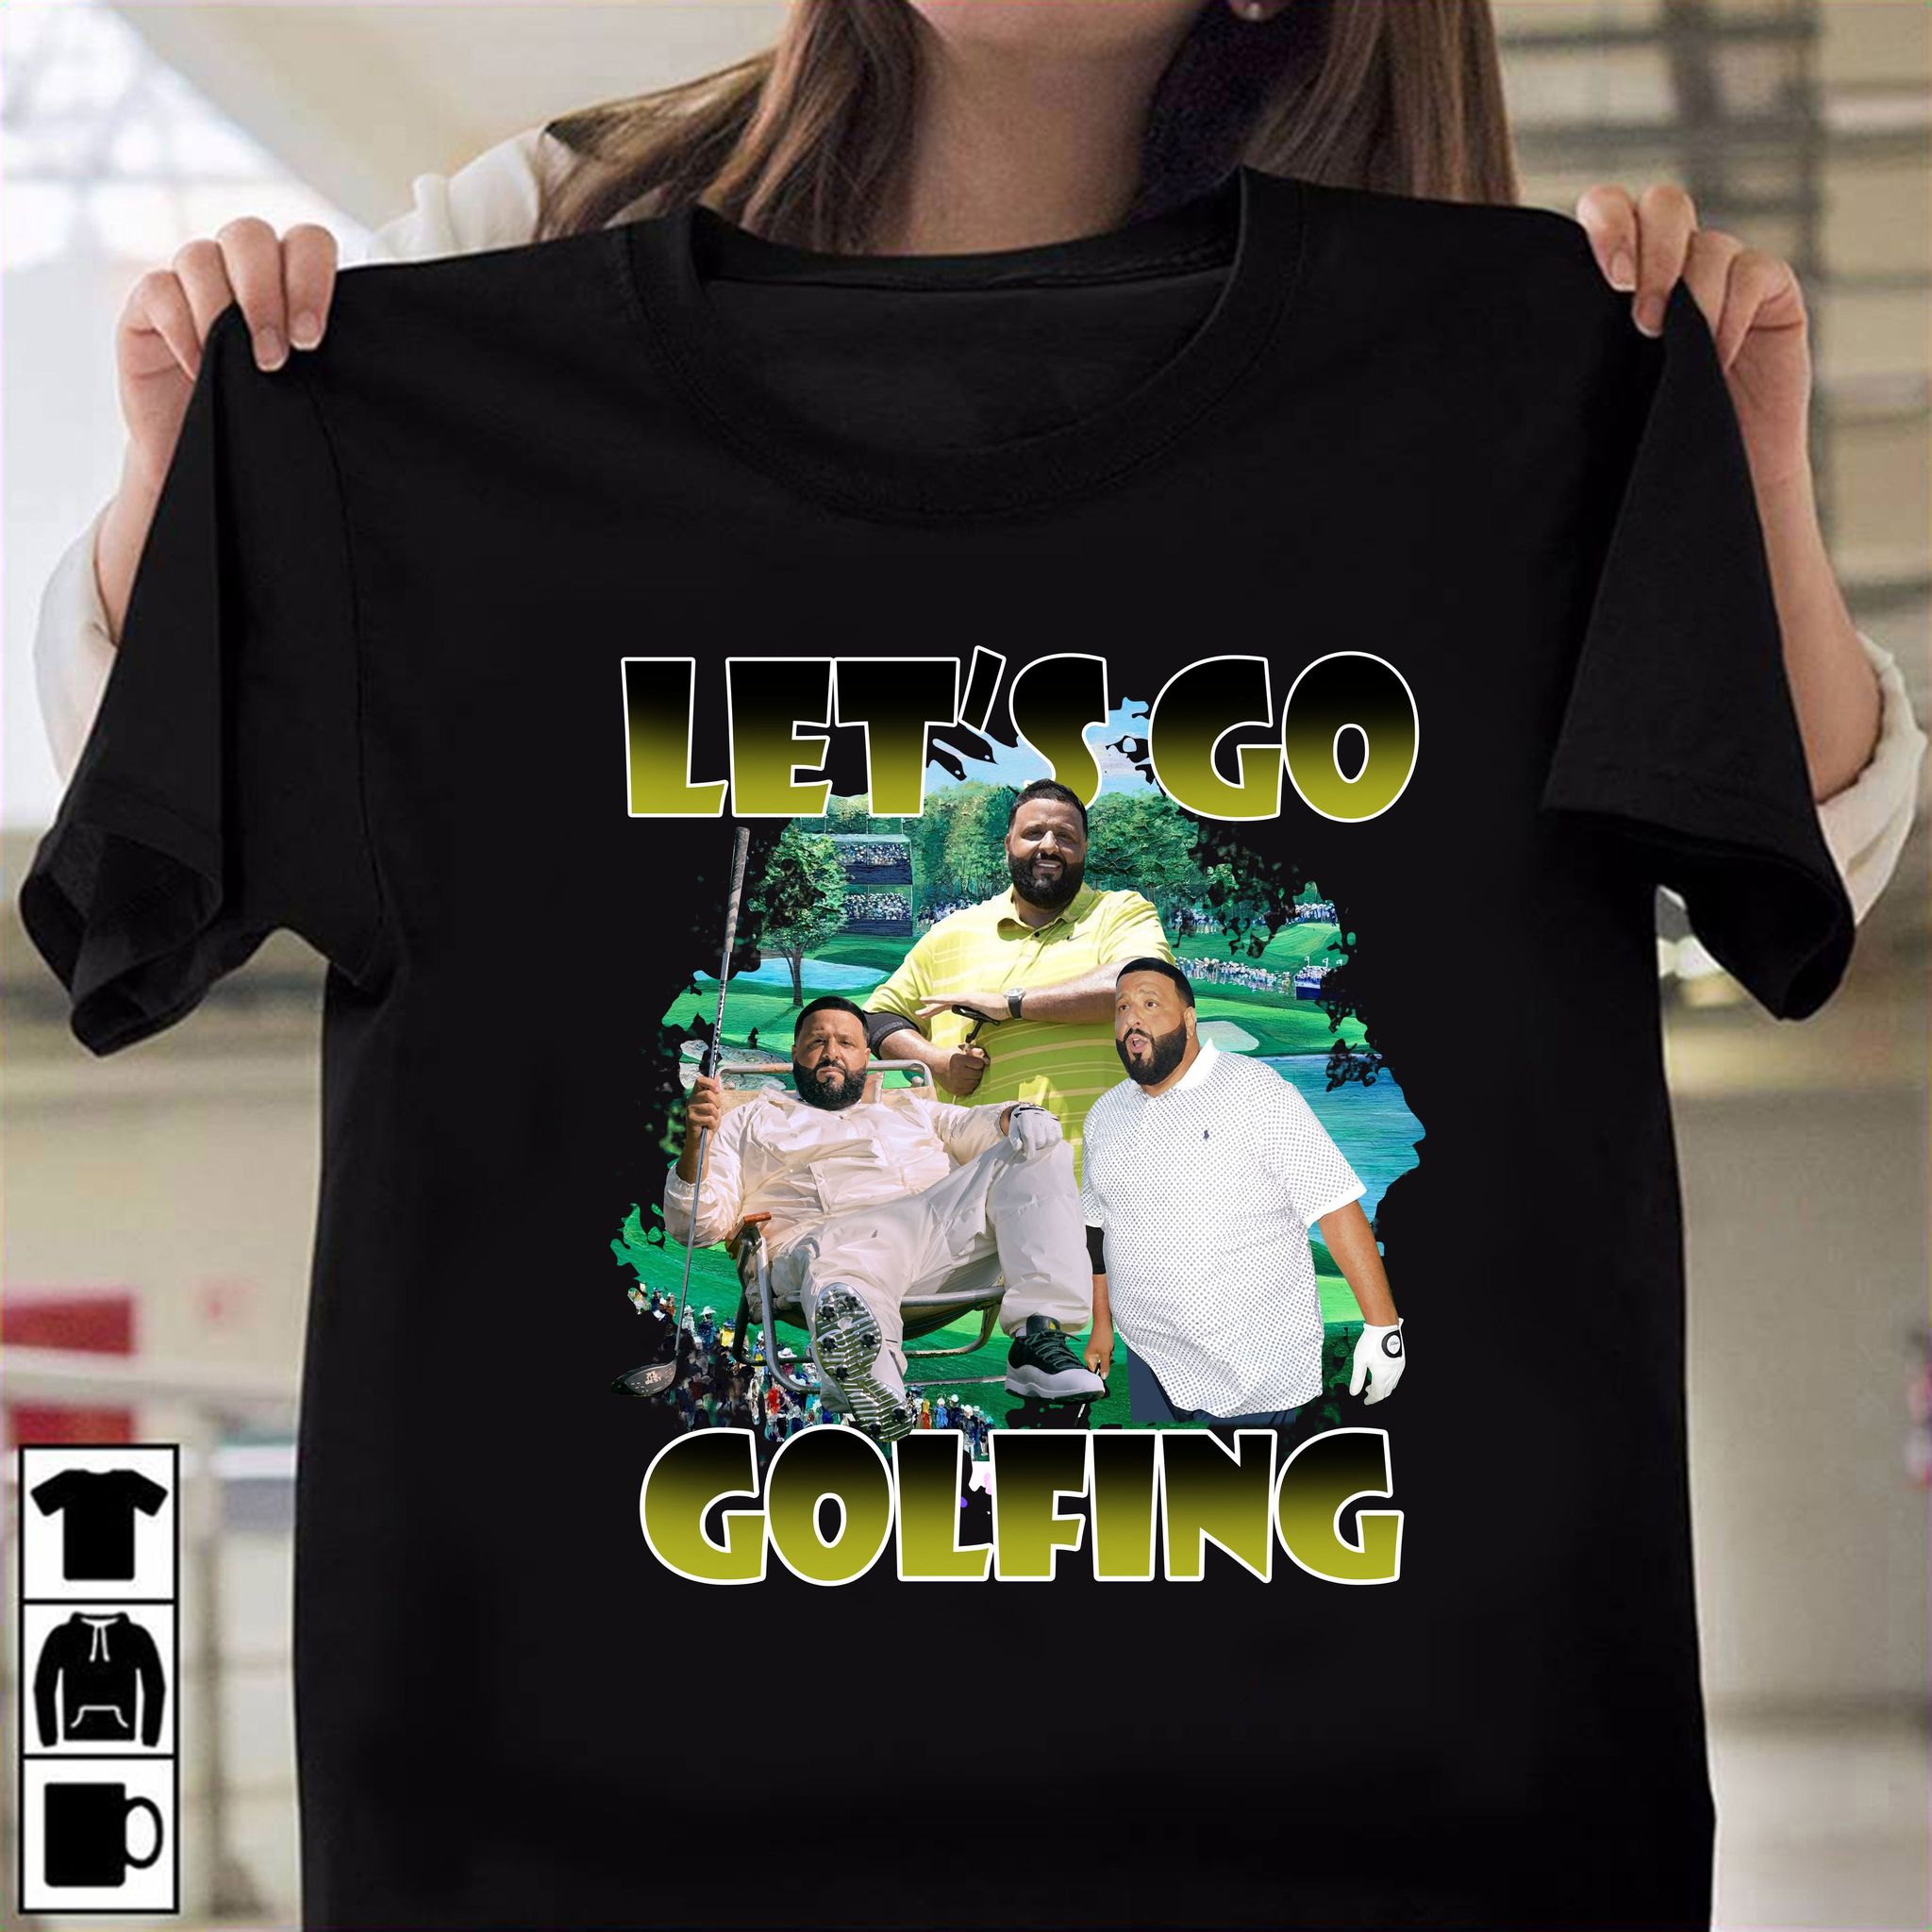 DJ Khaled T-Shirt, God Did T-Shirt, DJ Khaled Golfing T-Shirt, DJ Khaled Homage T-Shirt, Let’s Go Golfing DJ Khaled T-Shirt Black